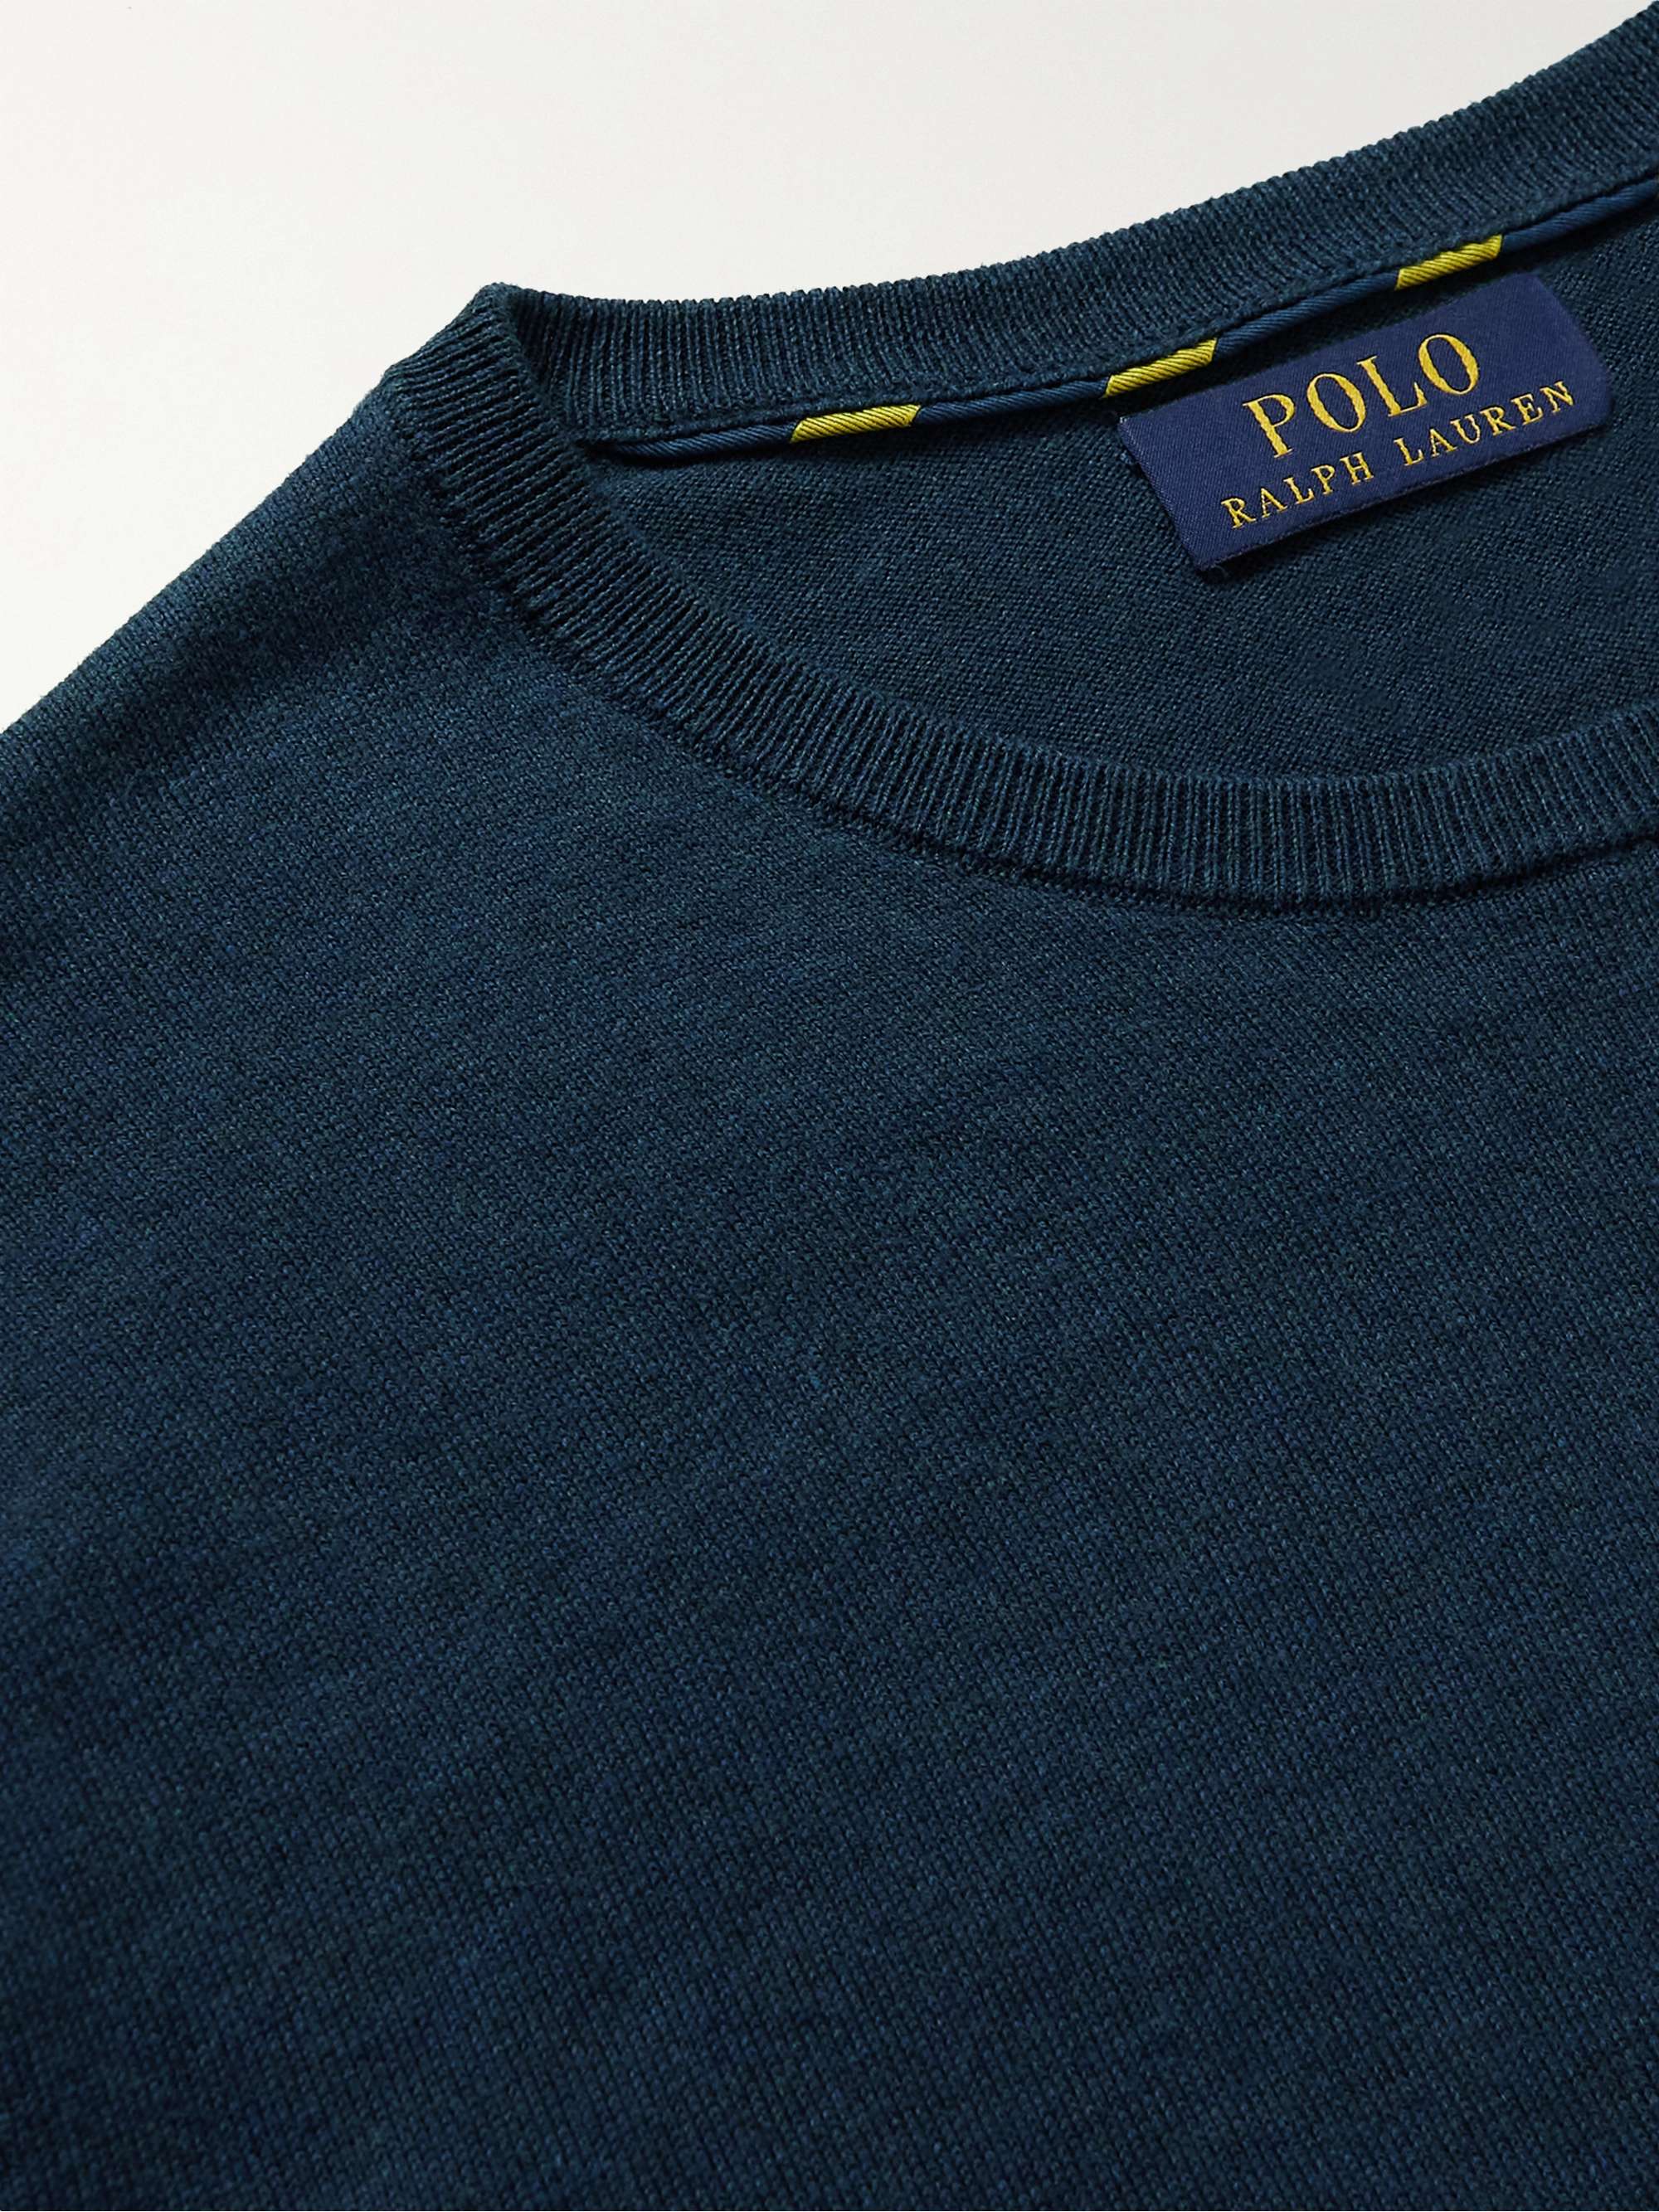 POLO RALPH LAUREN Logo-Embroidered Pima Cotton Sweater